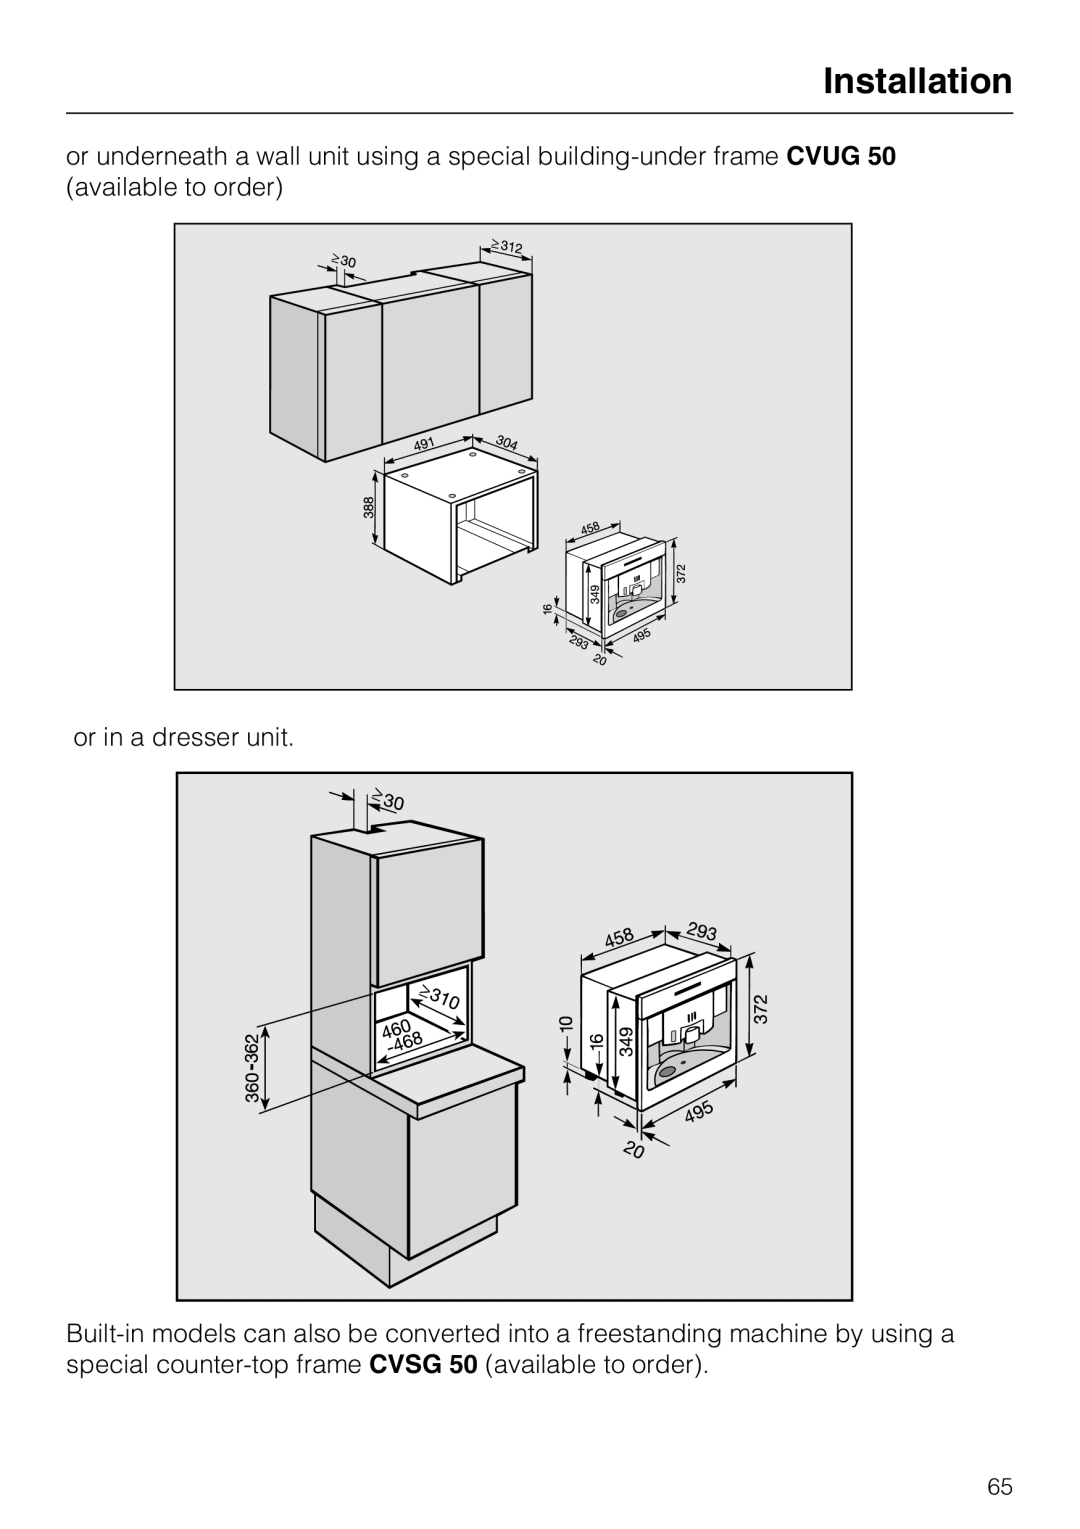 Miele CVA 3650 installation instructions Installation, or in a dresser unit 